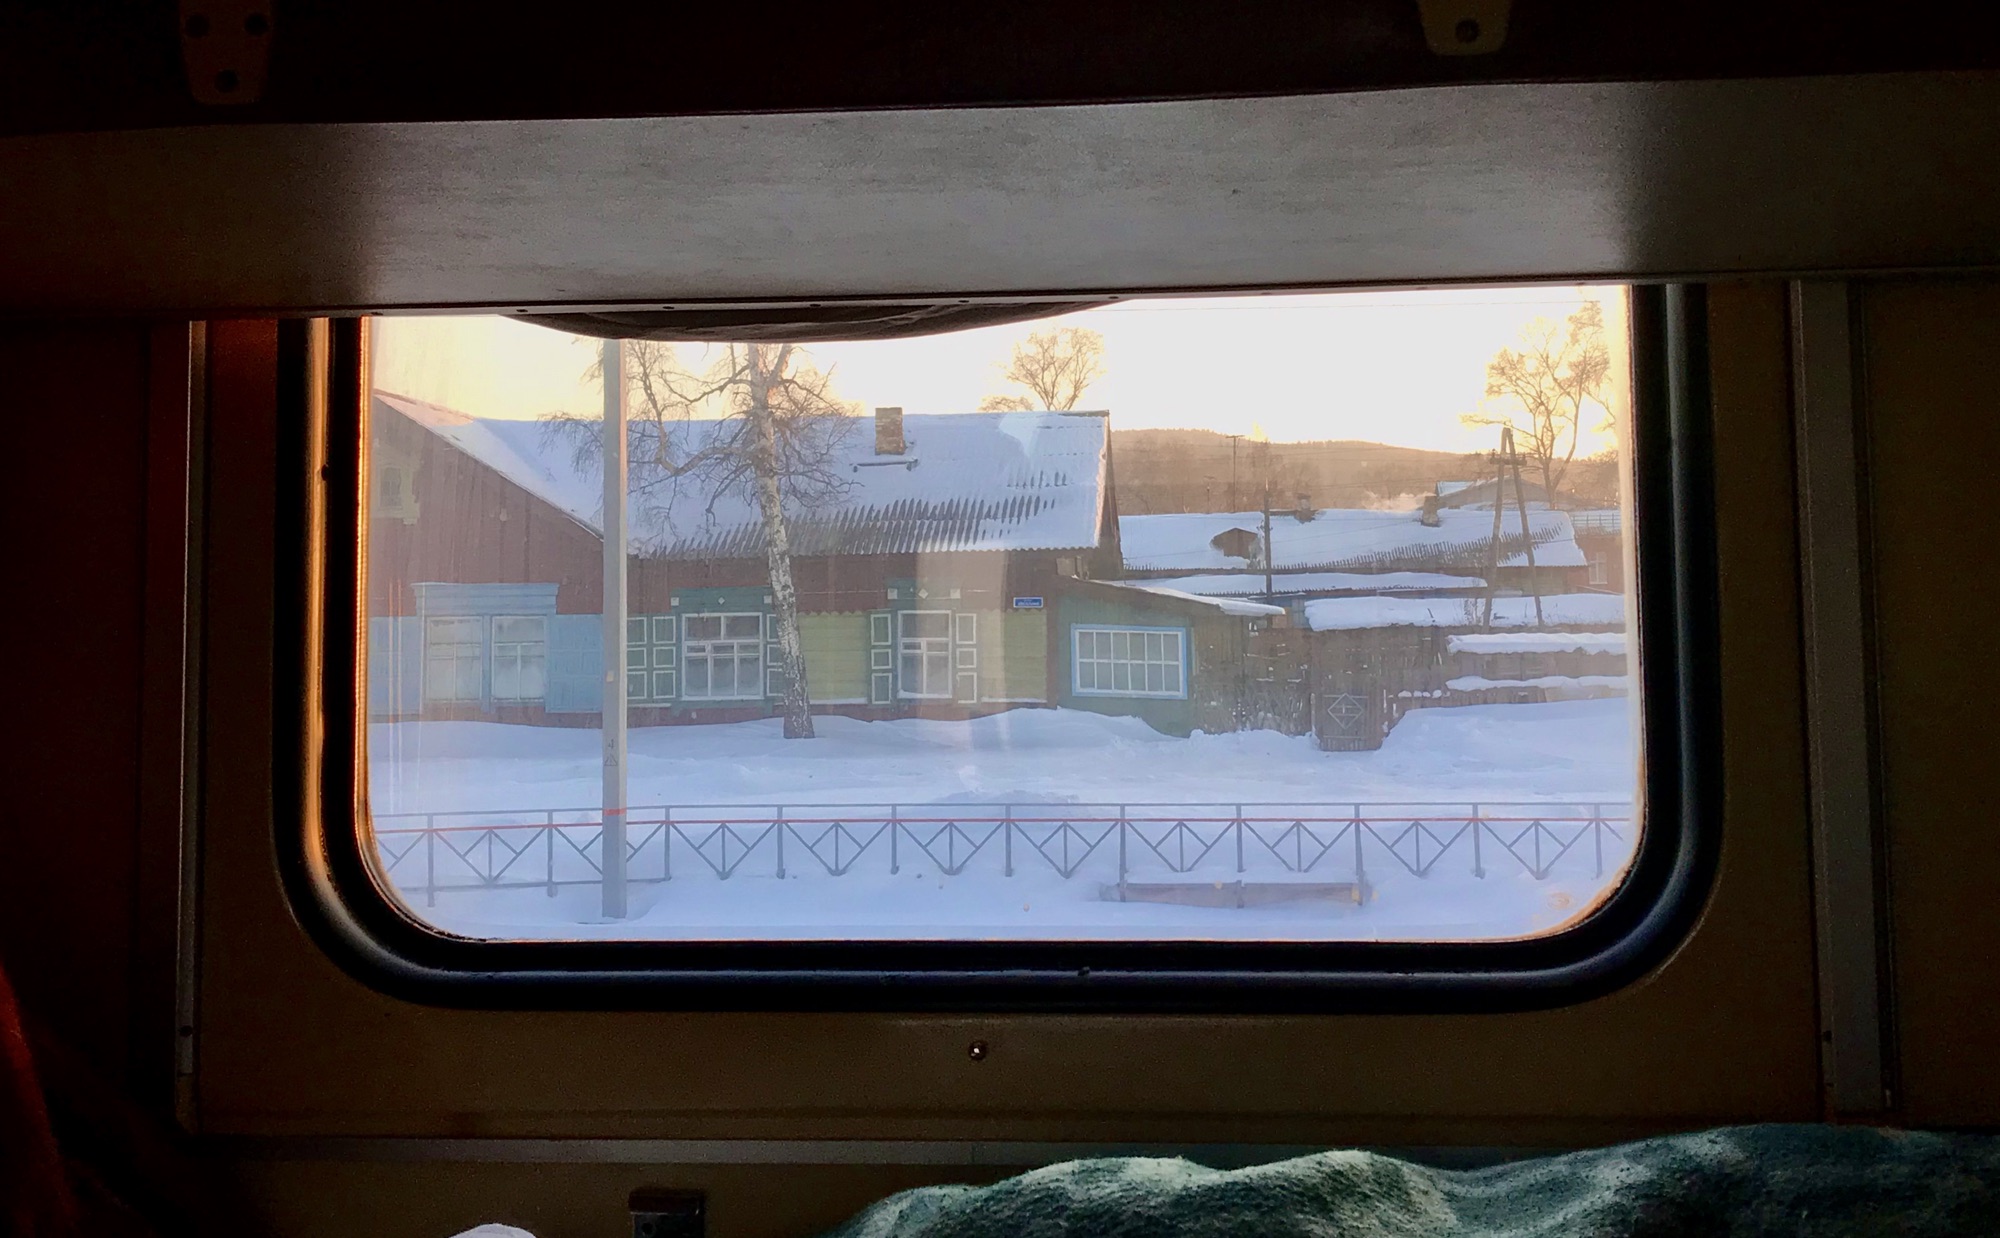 Winter trip to Russia – snowy fairytale